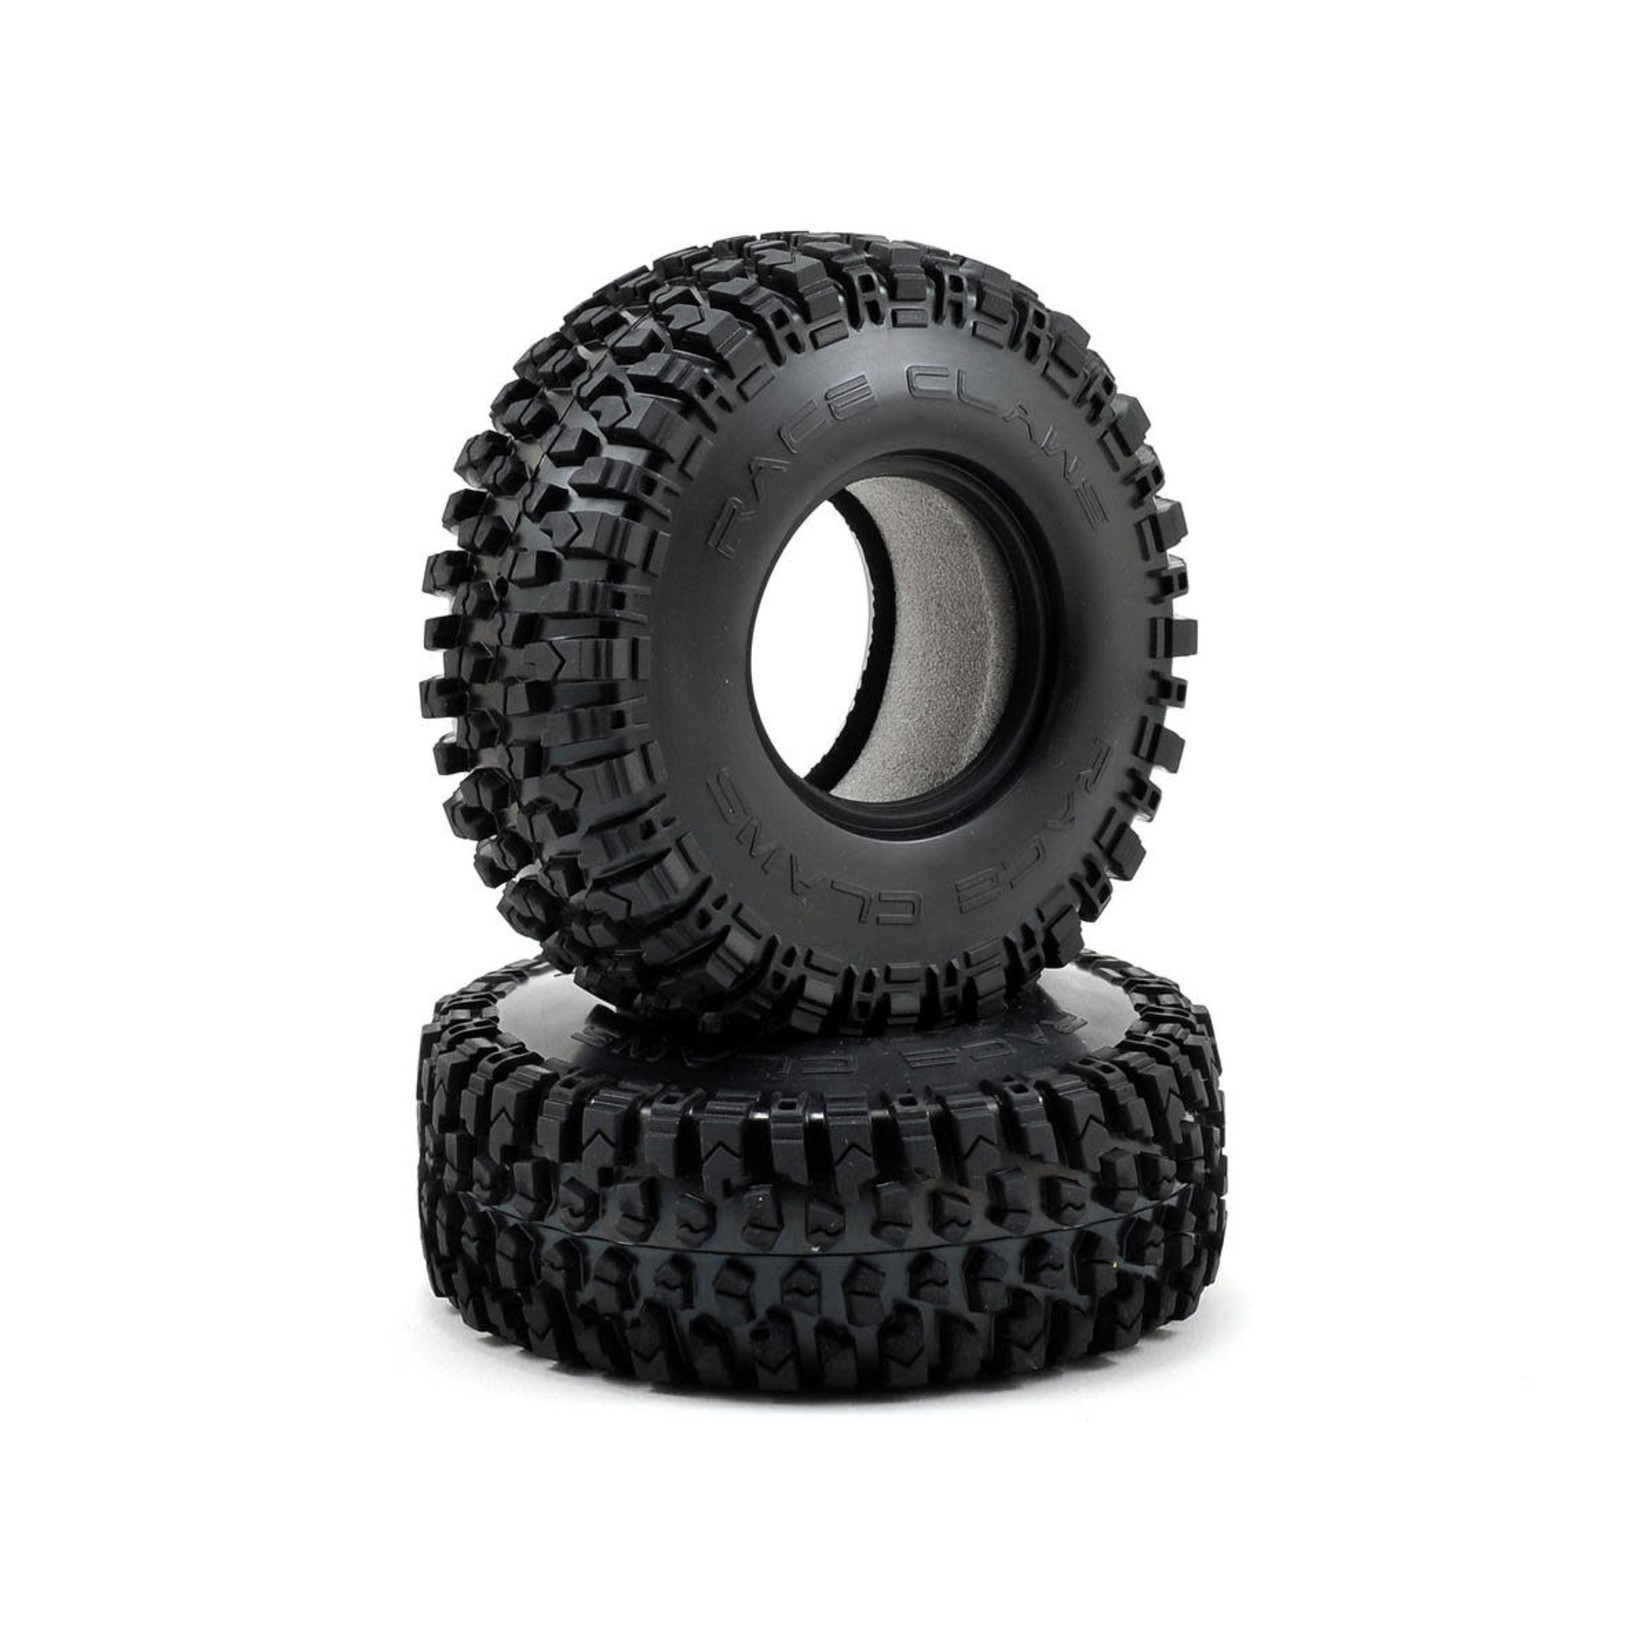 Vaterra Vaterra Race Claw 1.9" Rock Crawler Tires w/Inserts (2) #VTR43001